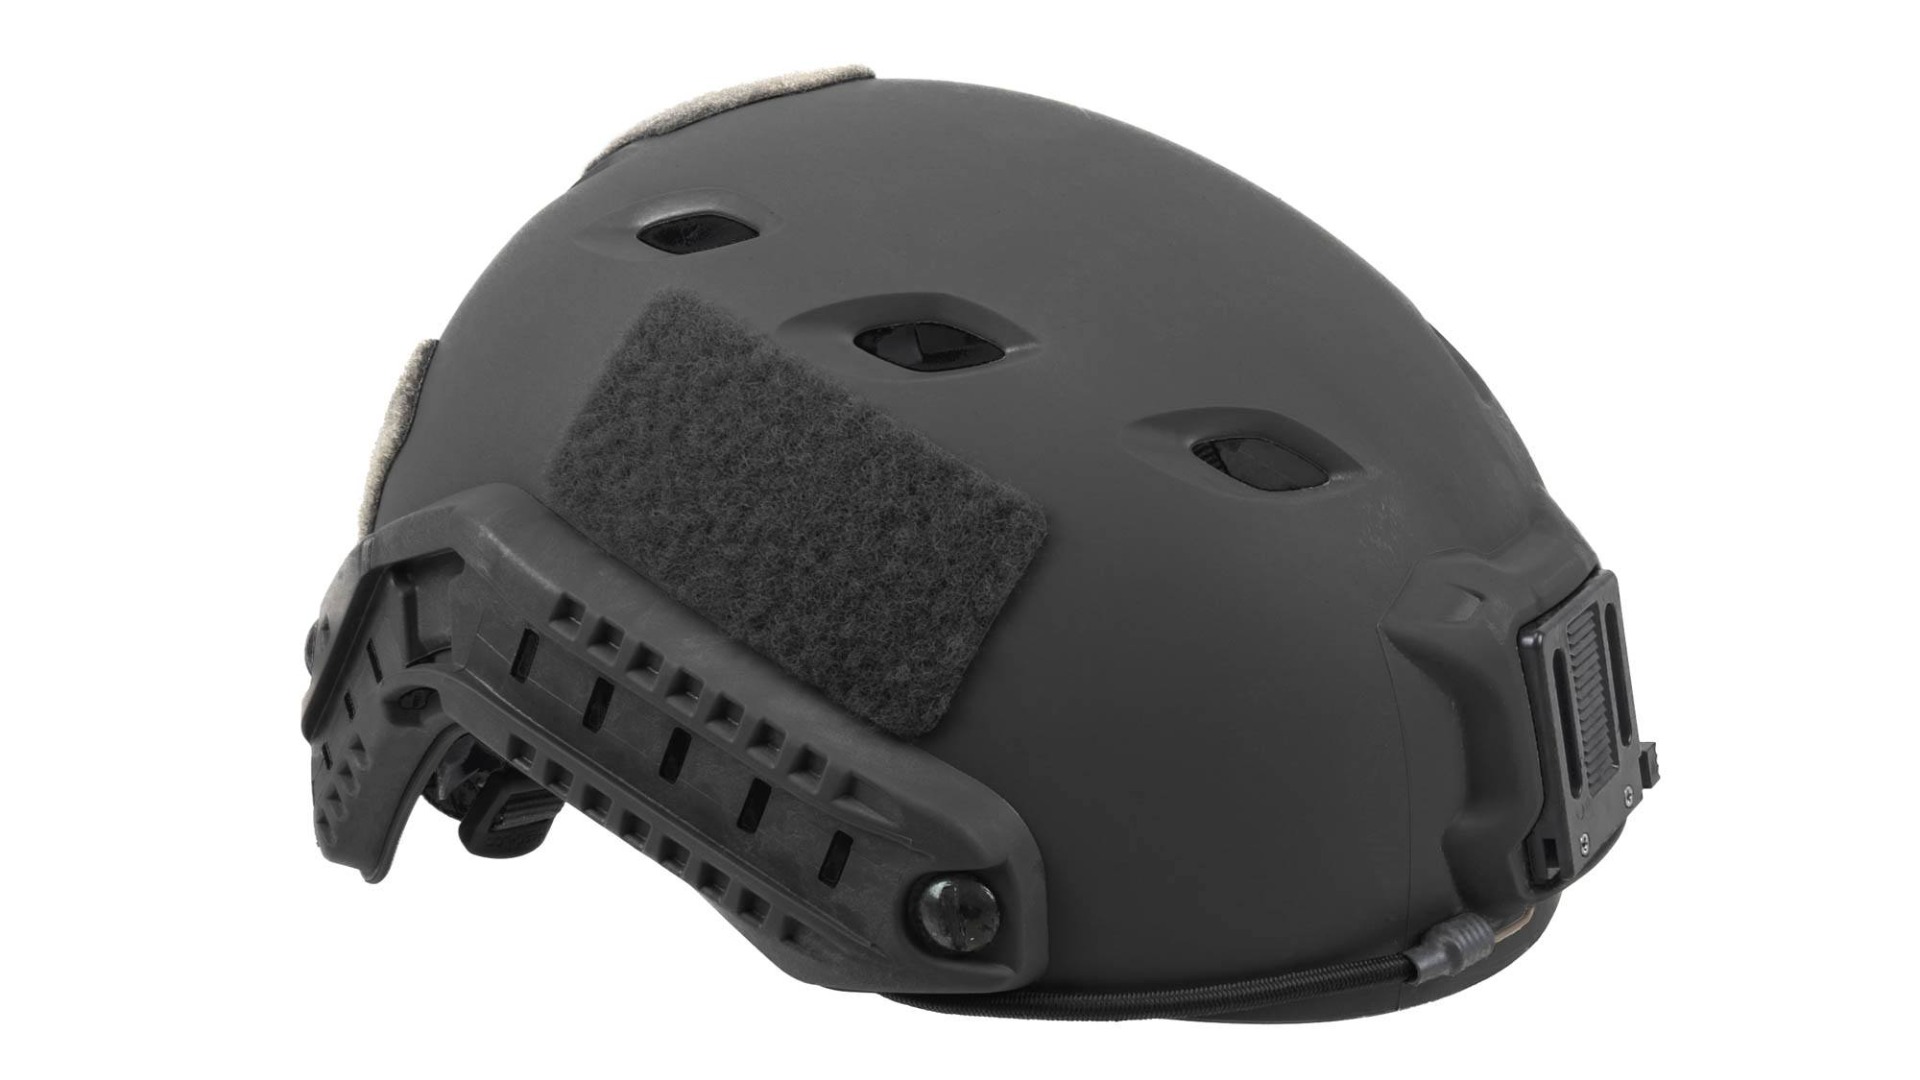 Ops-Core Fast Bump High Cut Helmet - Black